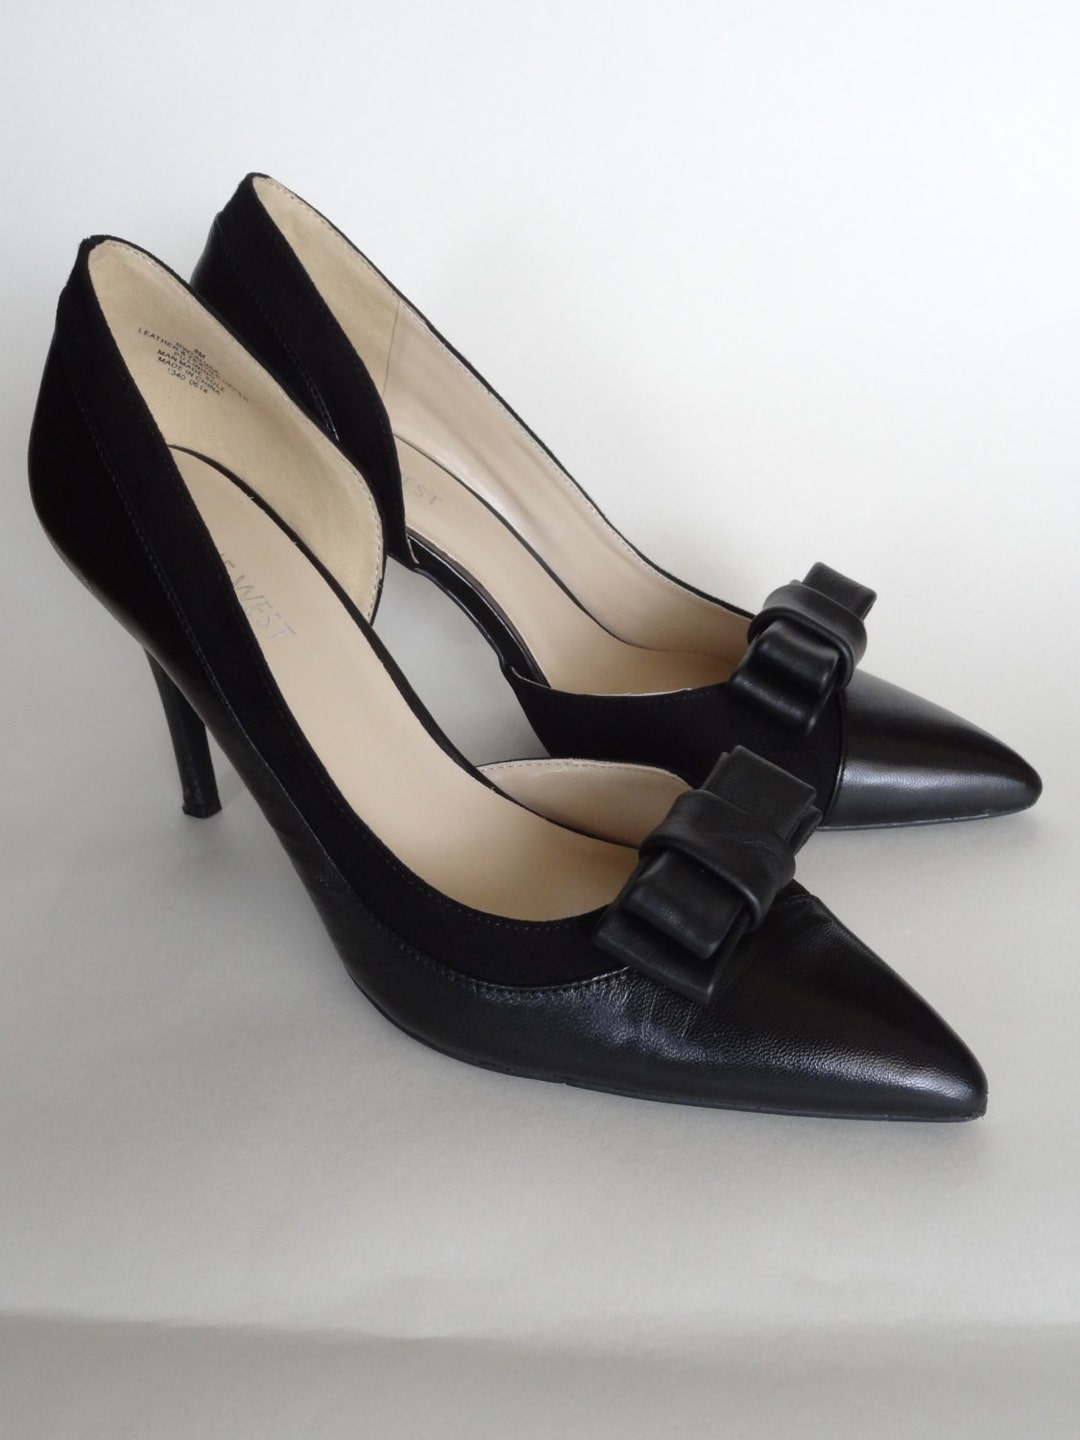 Black Leather Bow Shoe Clips Shoe Decorations - Etsy